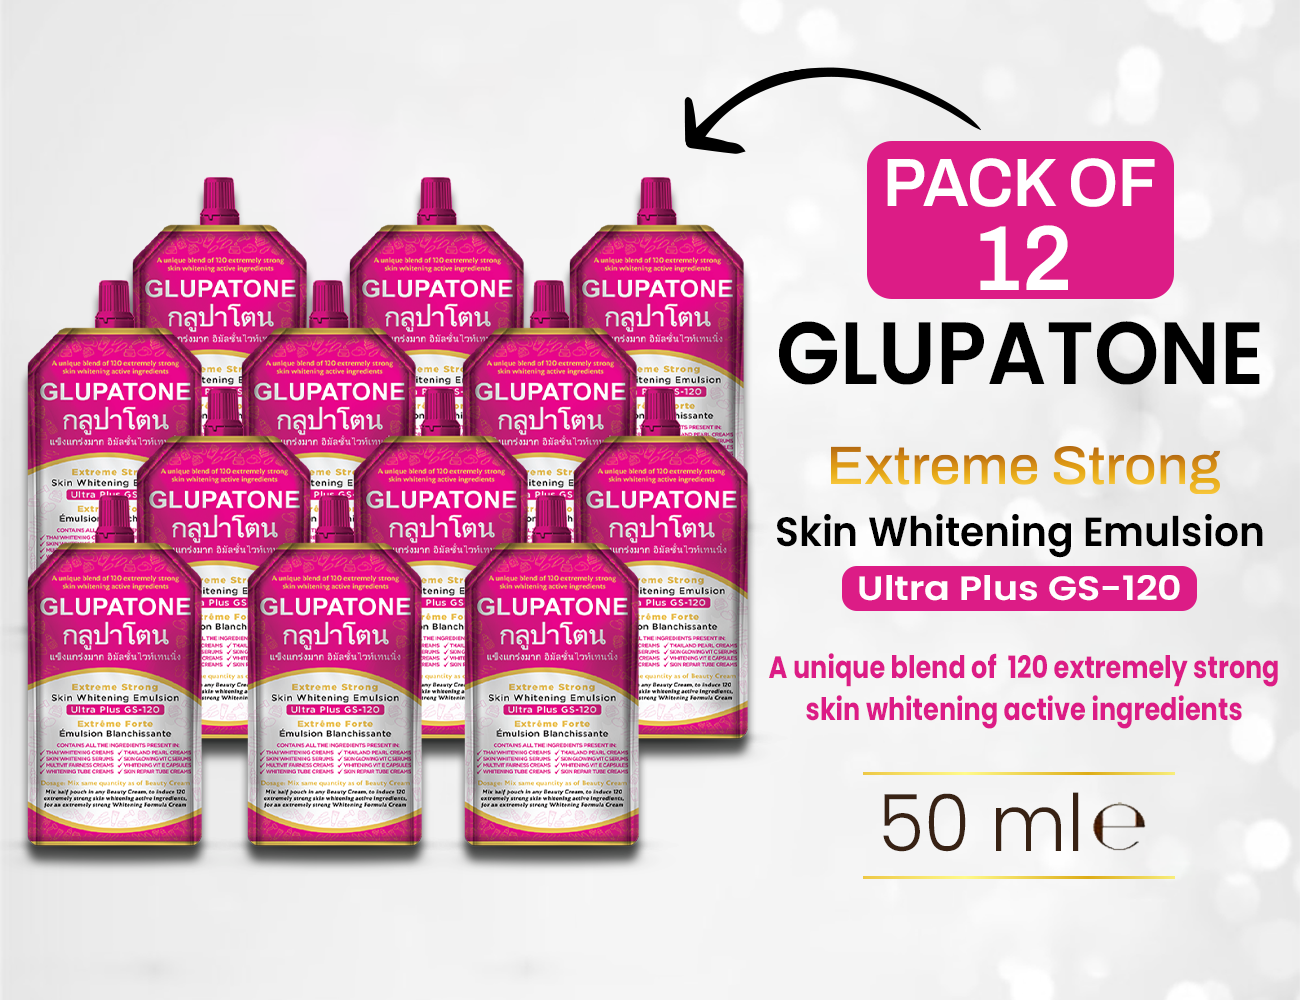 GLUPATONE Extreme Strong Whitening Emulsion 50 ml pack of 12